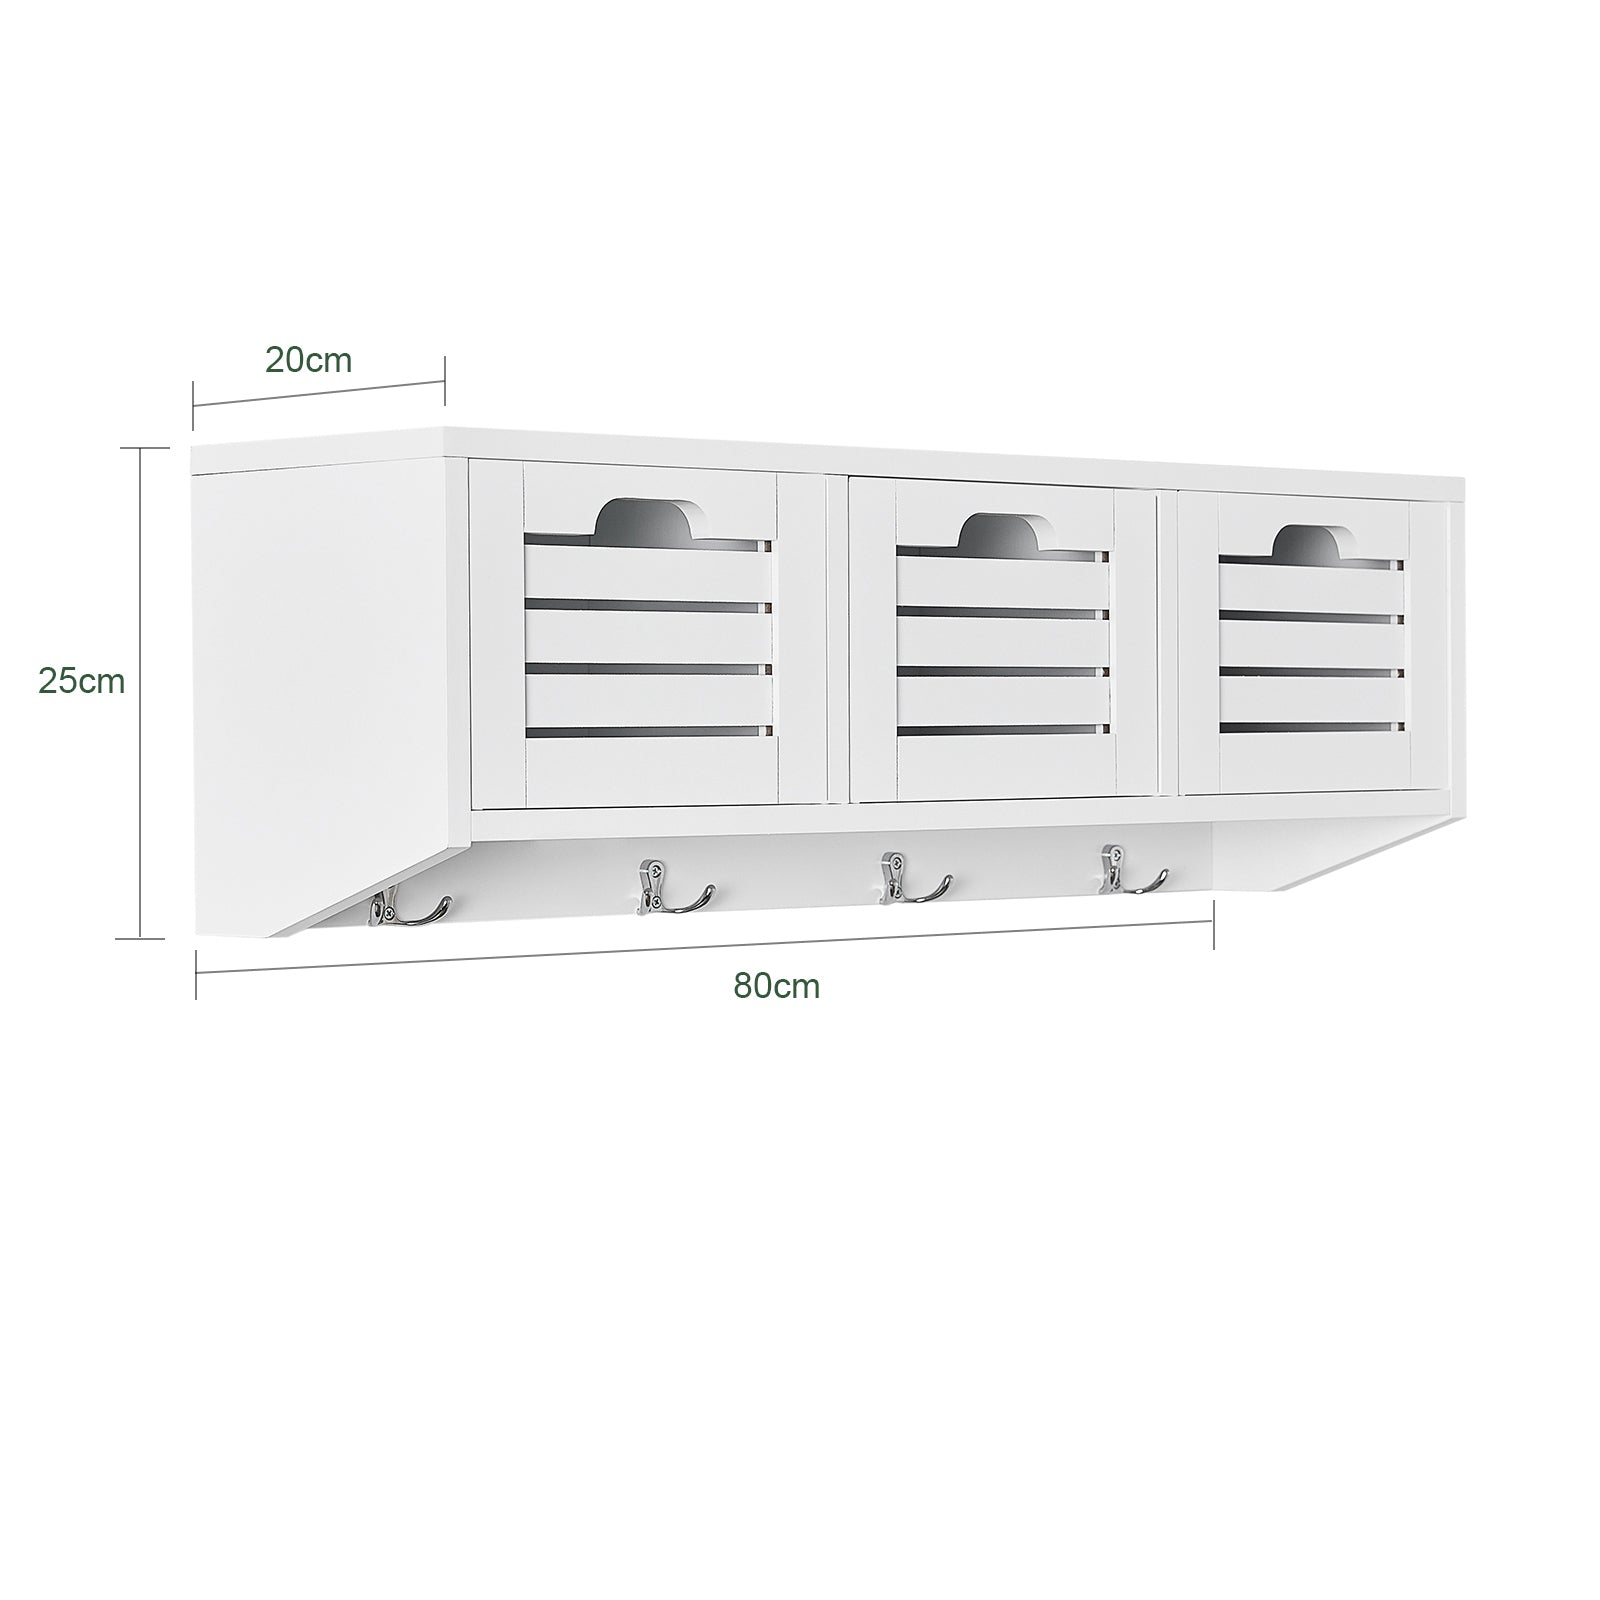 SoBuy FHK19-W, Wall Coat Rack Wall Shelf Wall Storage Cabinet Unit with 3 Drawers 4 Hooks